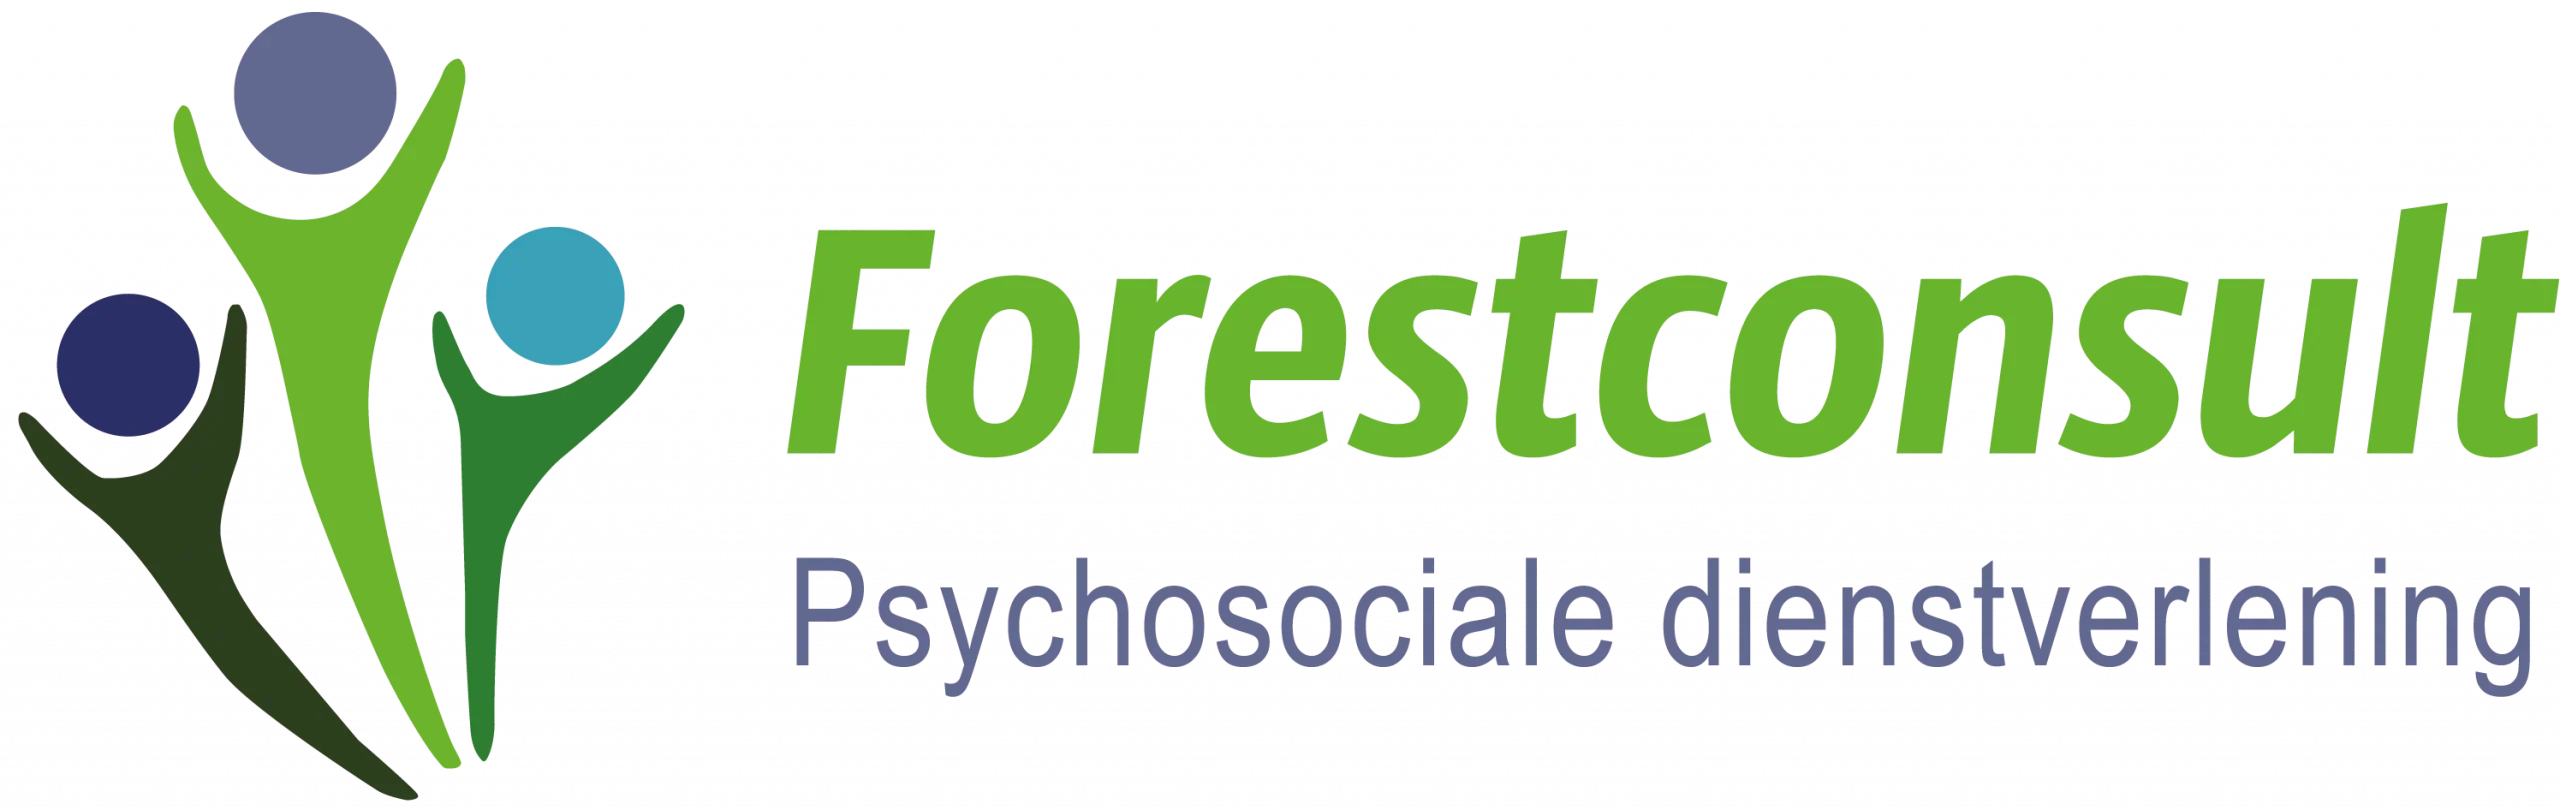 Forestconsult logo